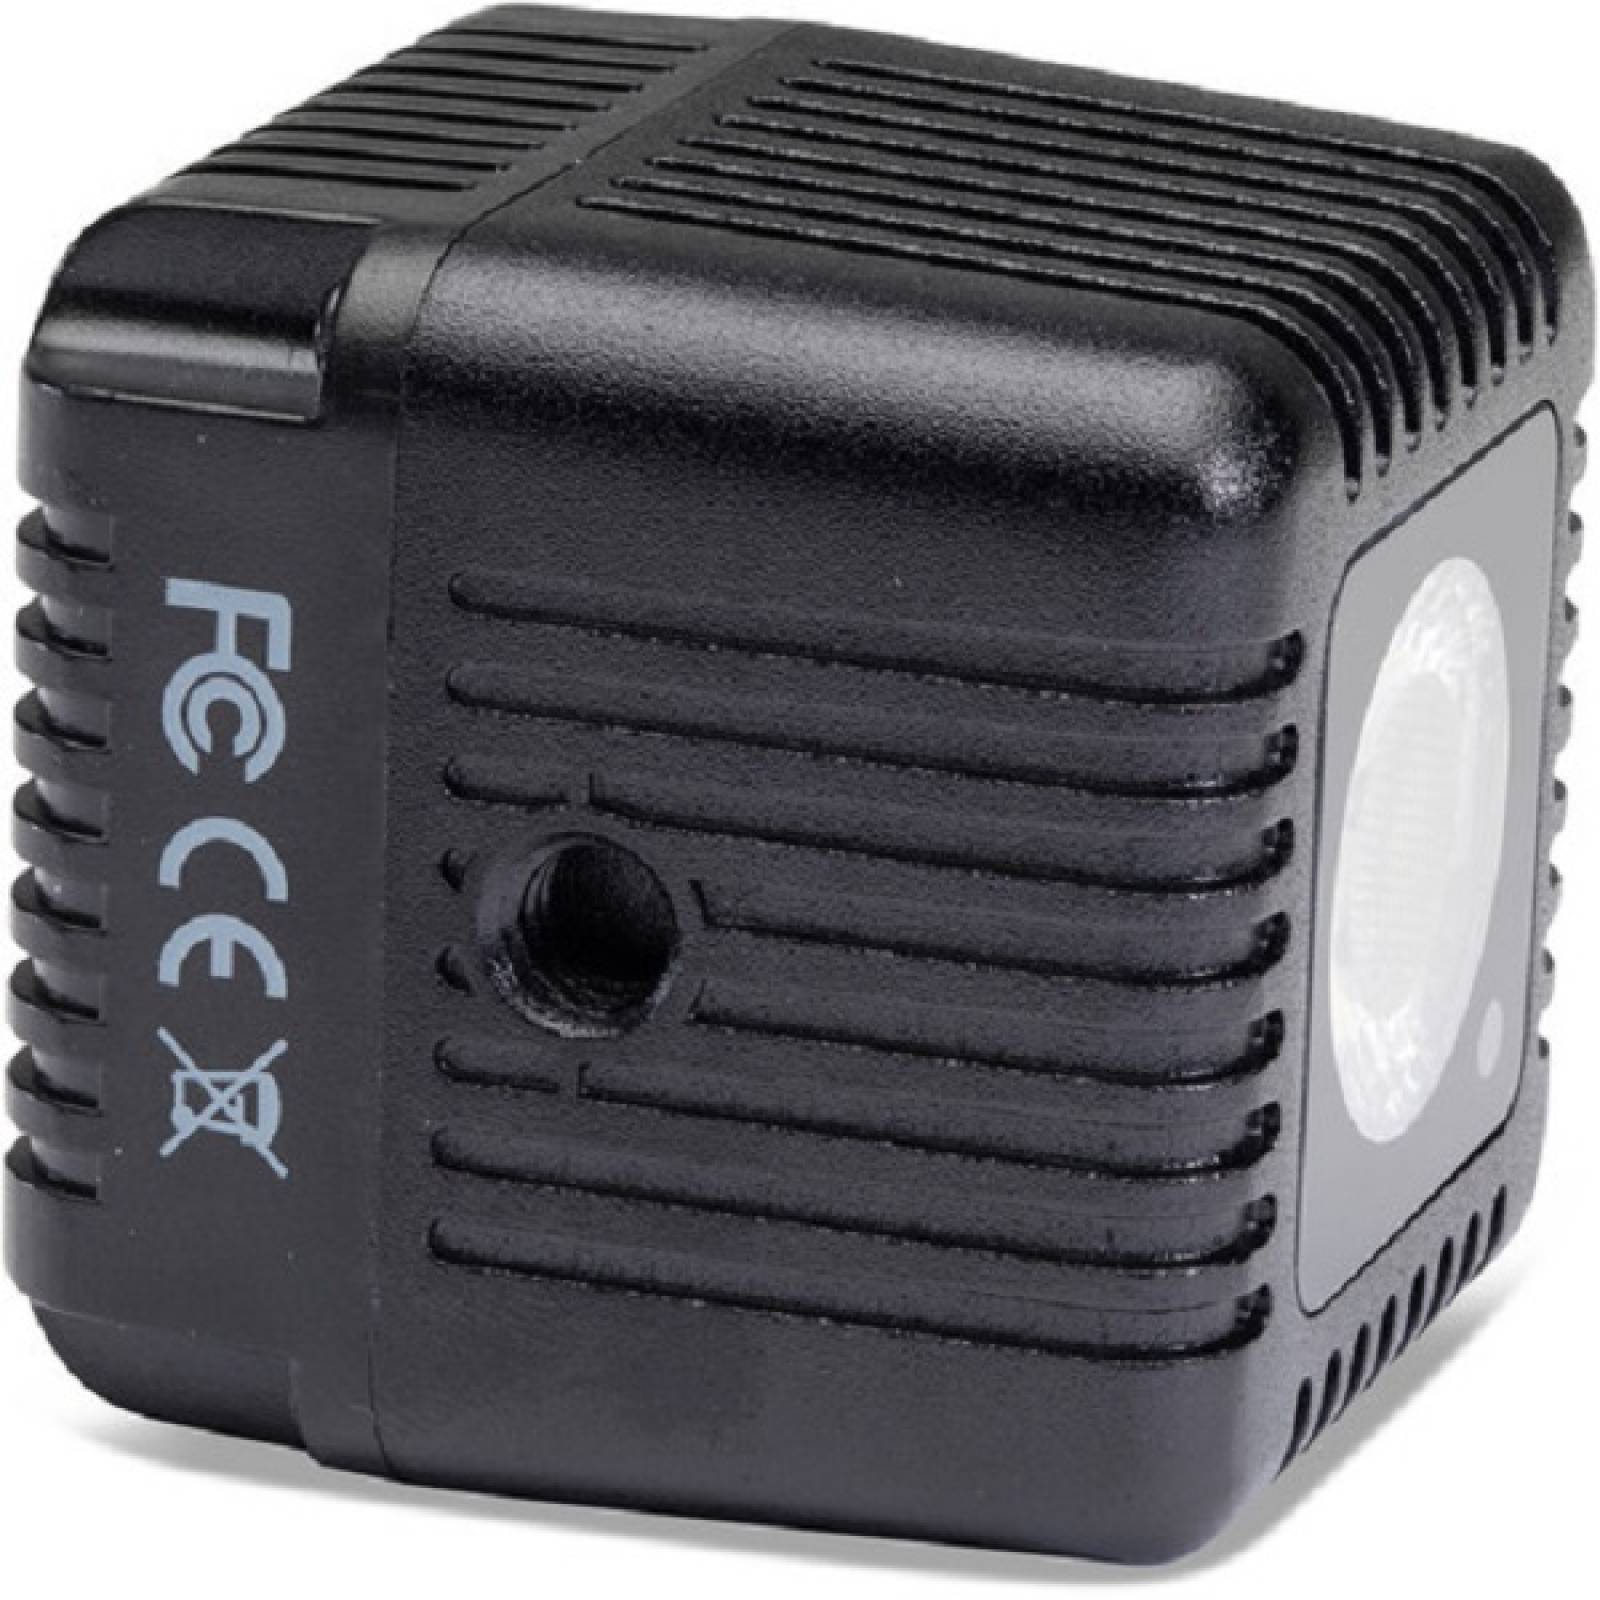 Luz Lume Cube Negro Bluetooth 1500 Lumenes LC-11B